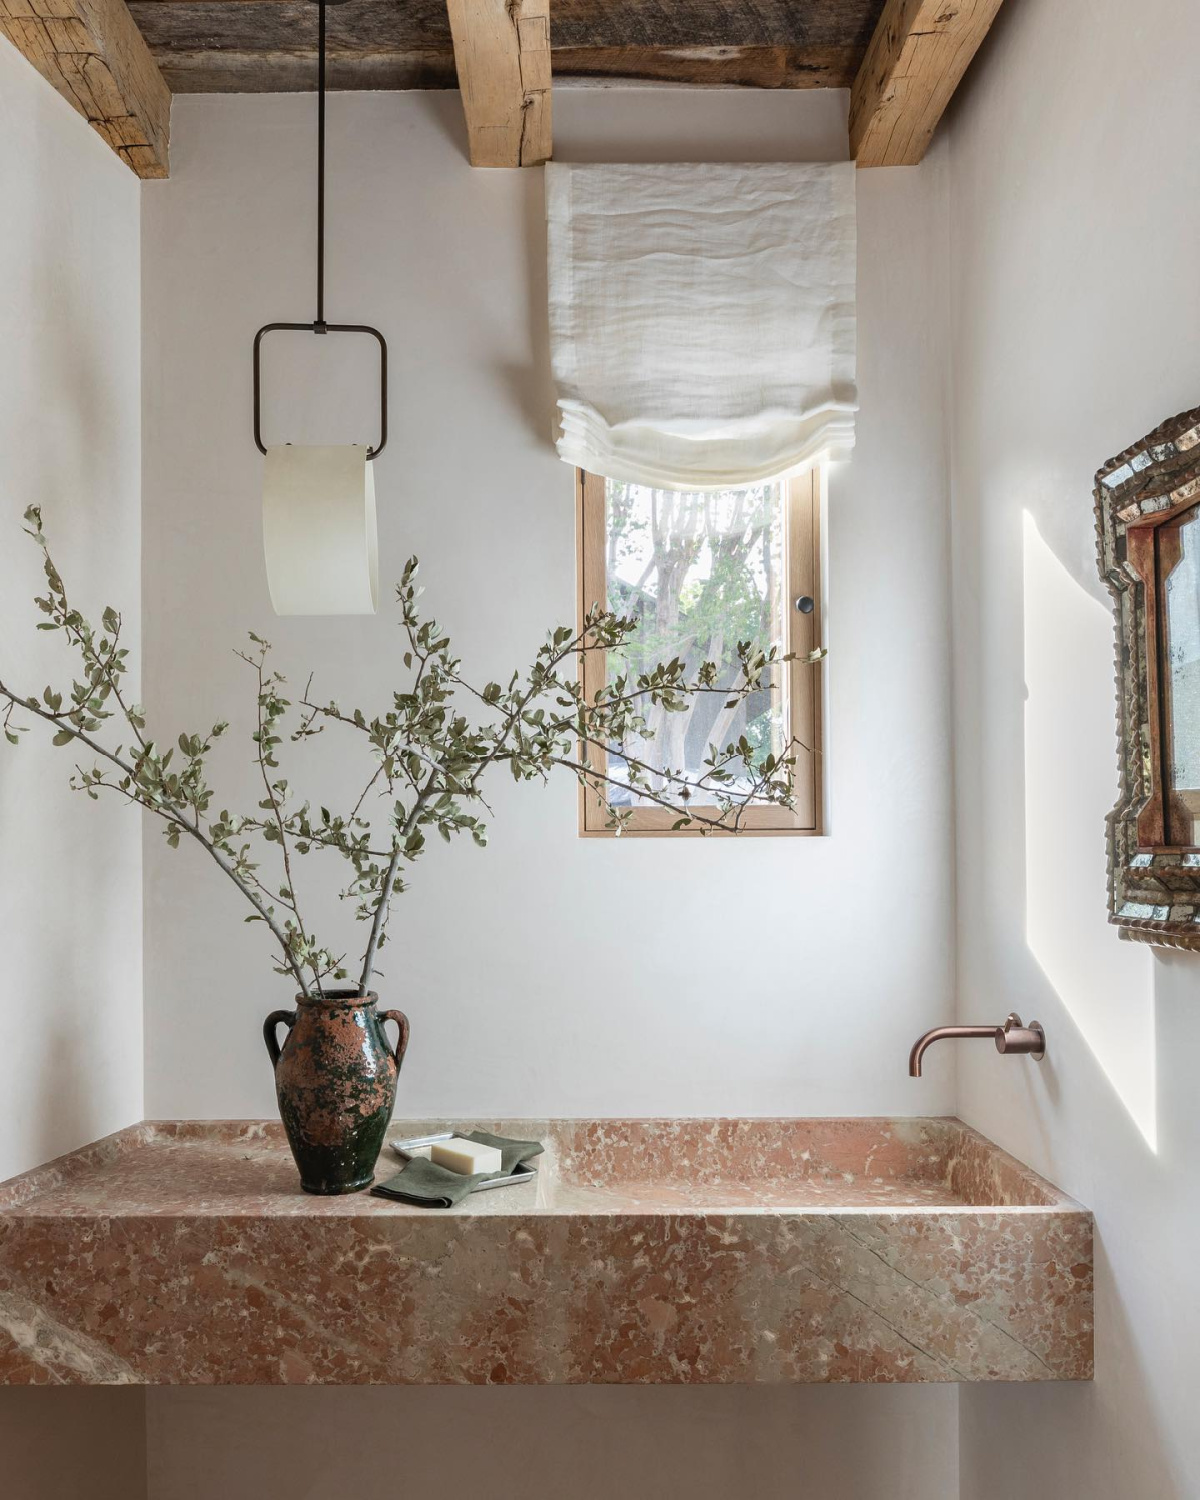 Belgian modern minimal bath with stone sink - Marie Flanigan design in a Lake Travis, TX home. Photo: Julie Soefer